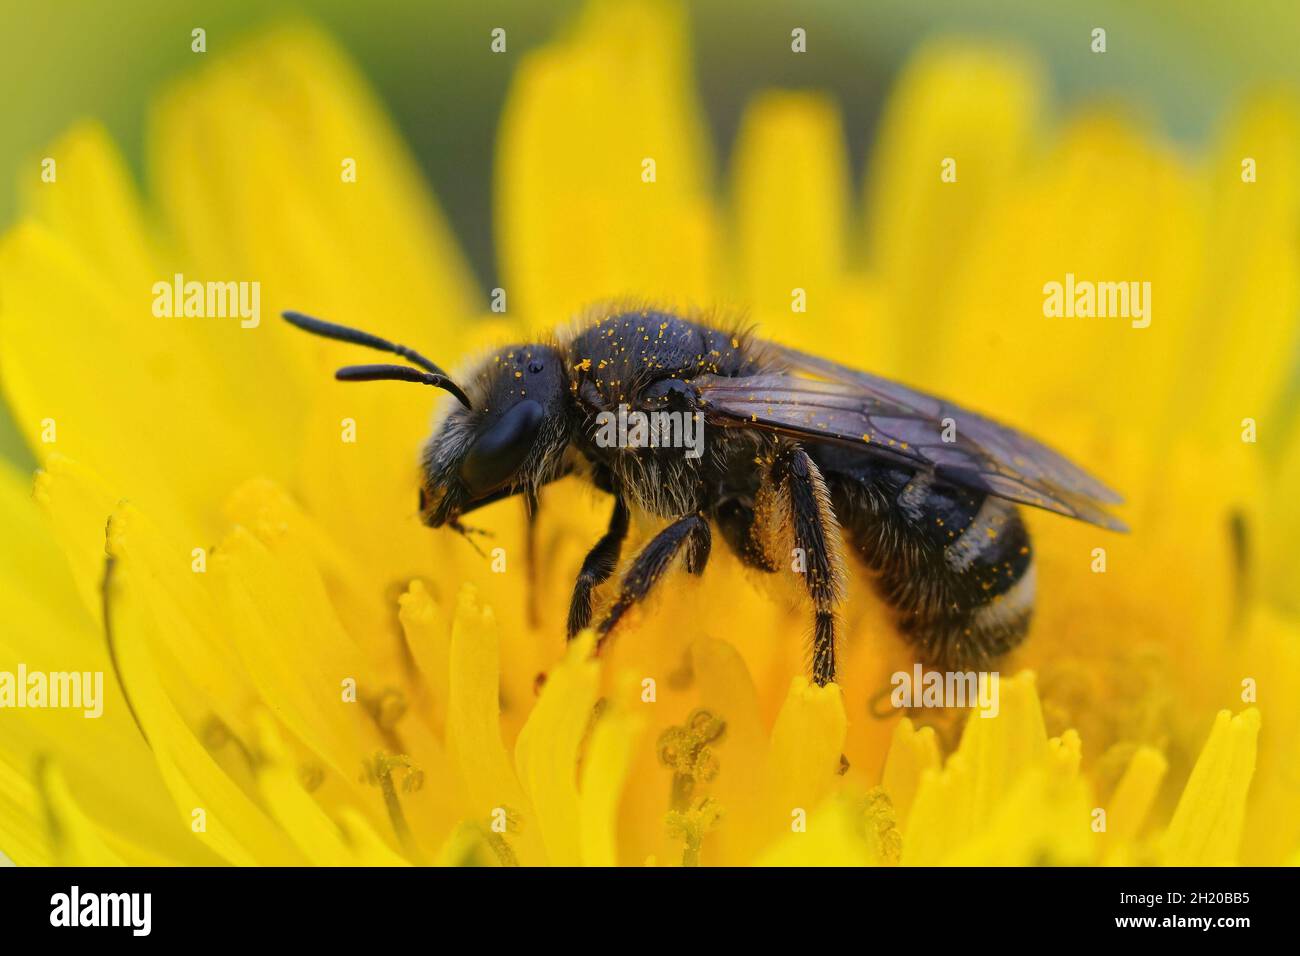 Closeup on a late active female Furrow bee, Lasioglossum Stock Photo